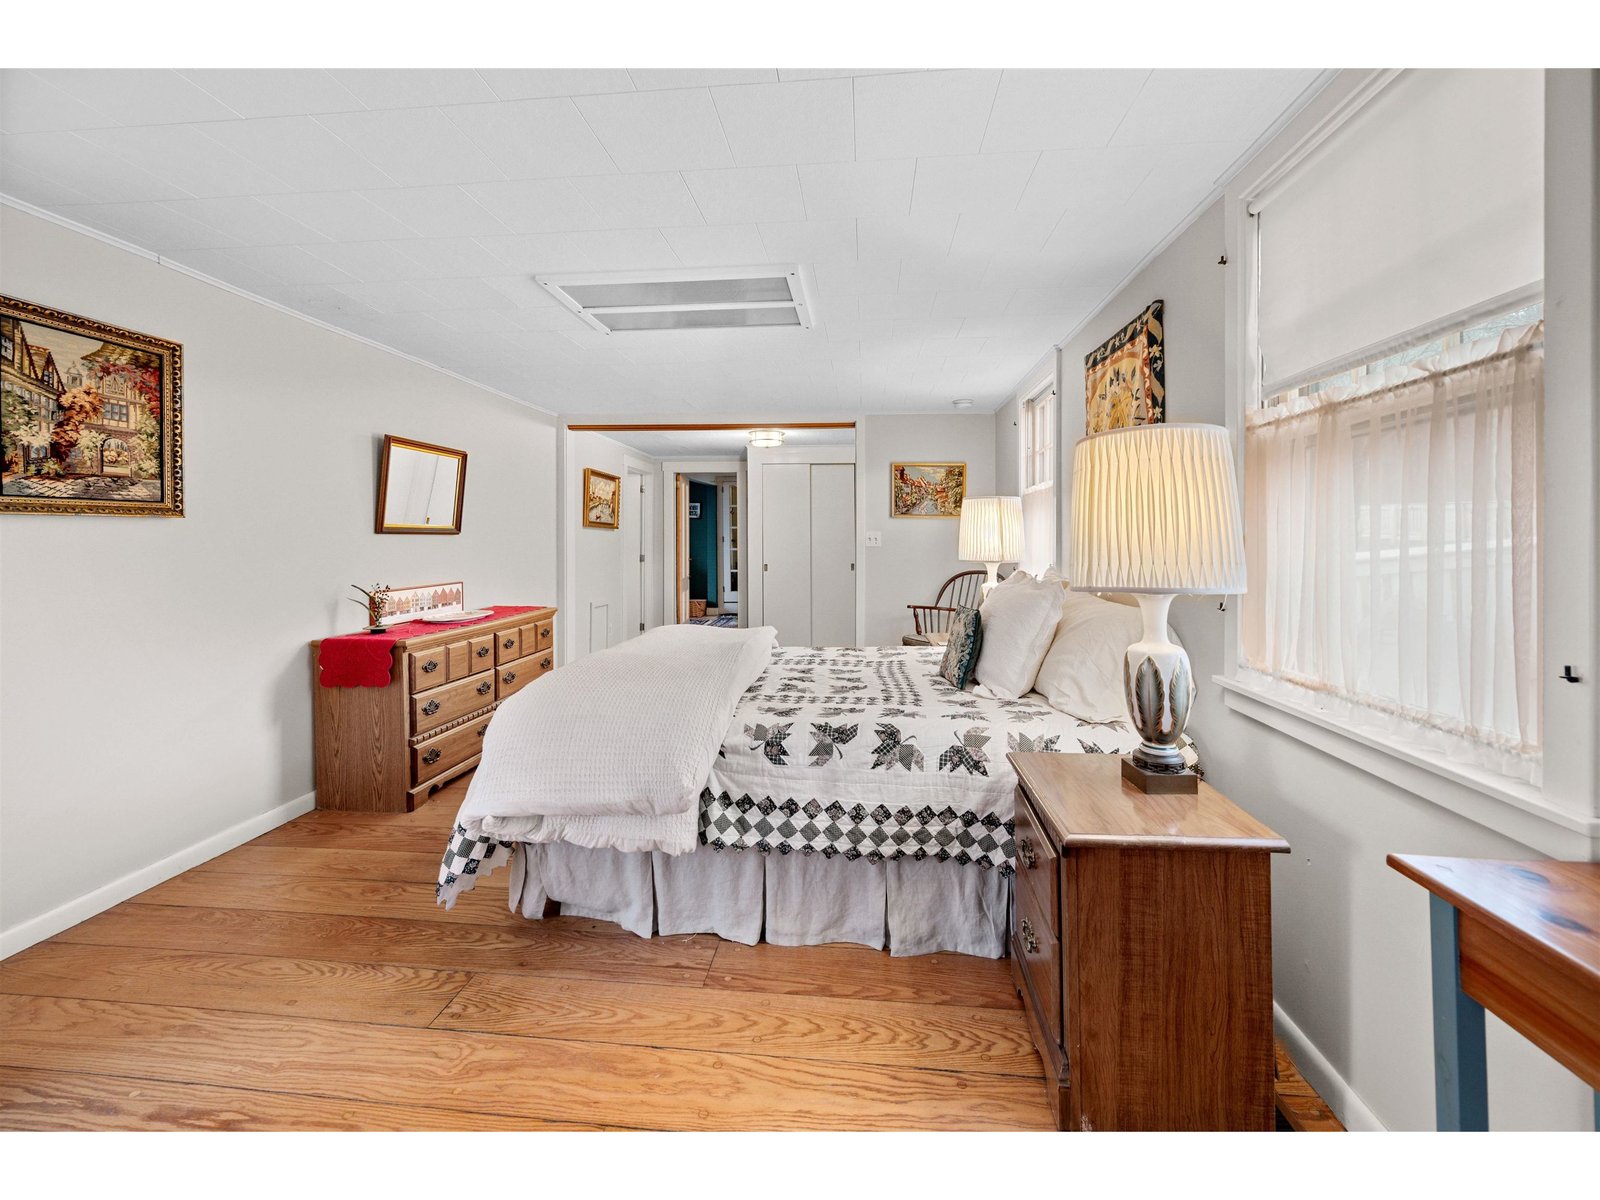 Living room auxiliary apartment/au pair